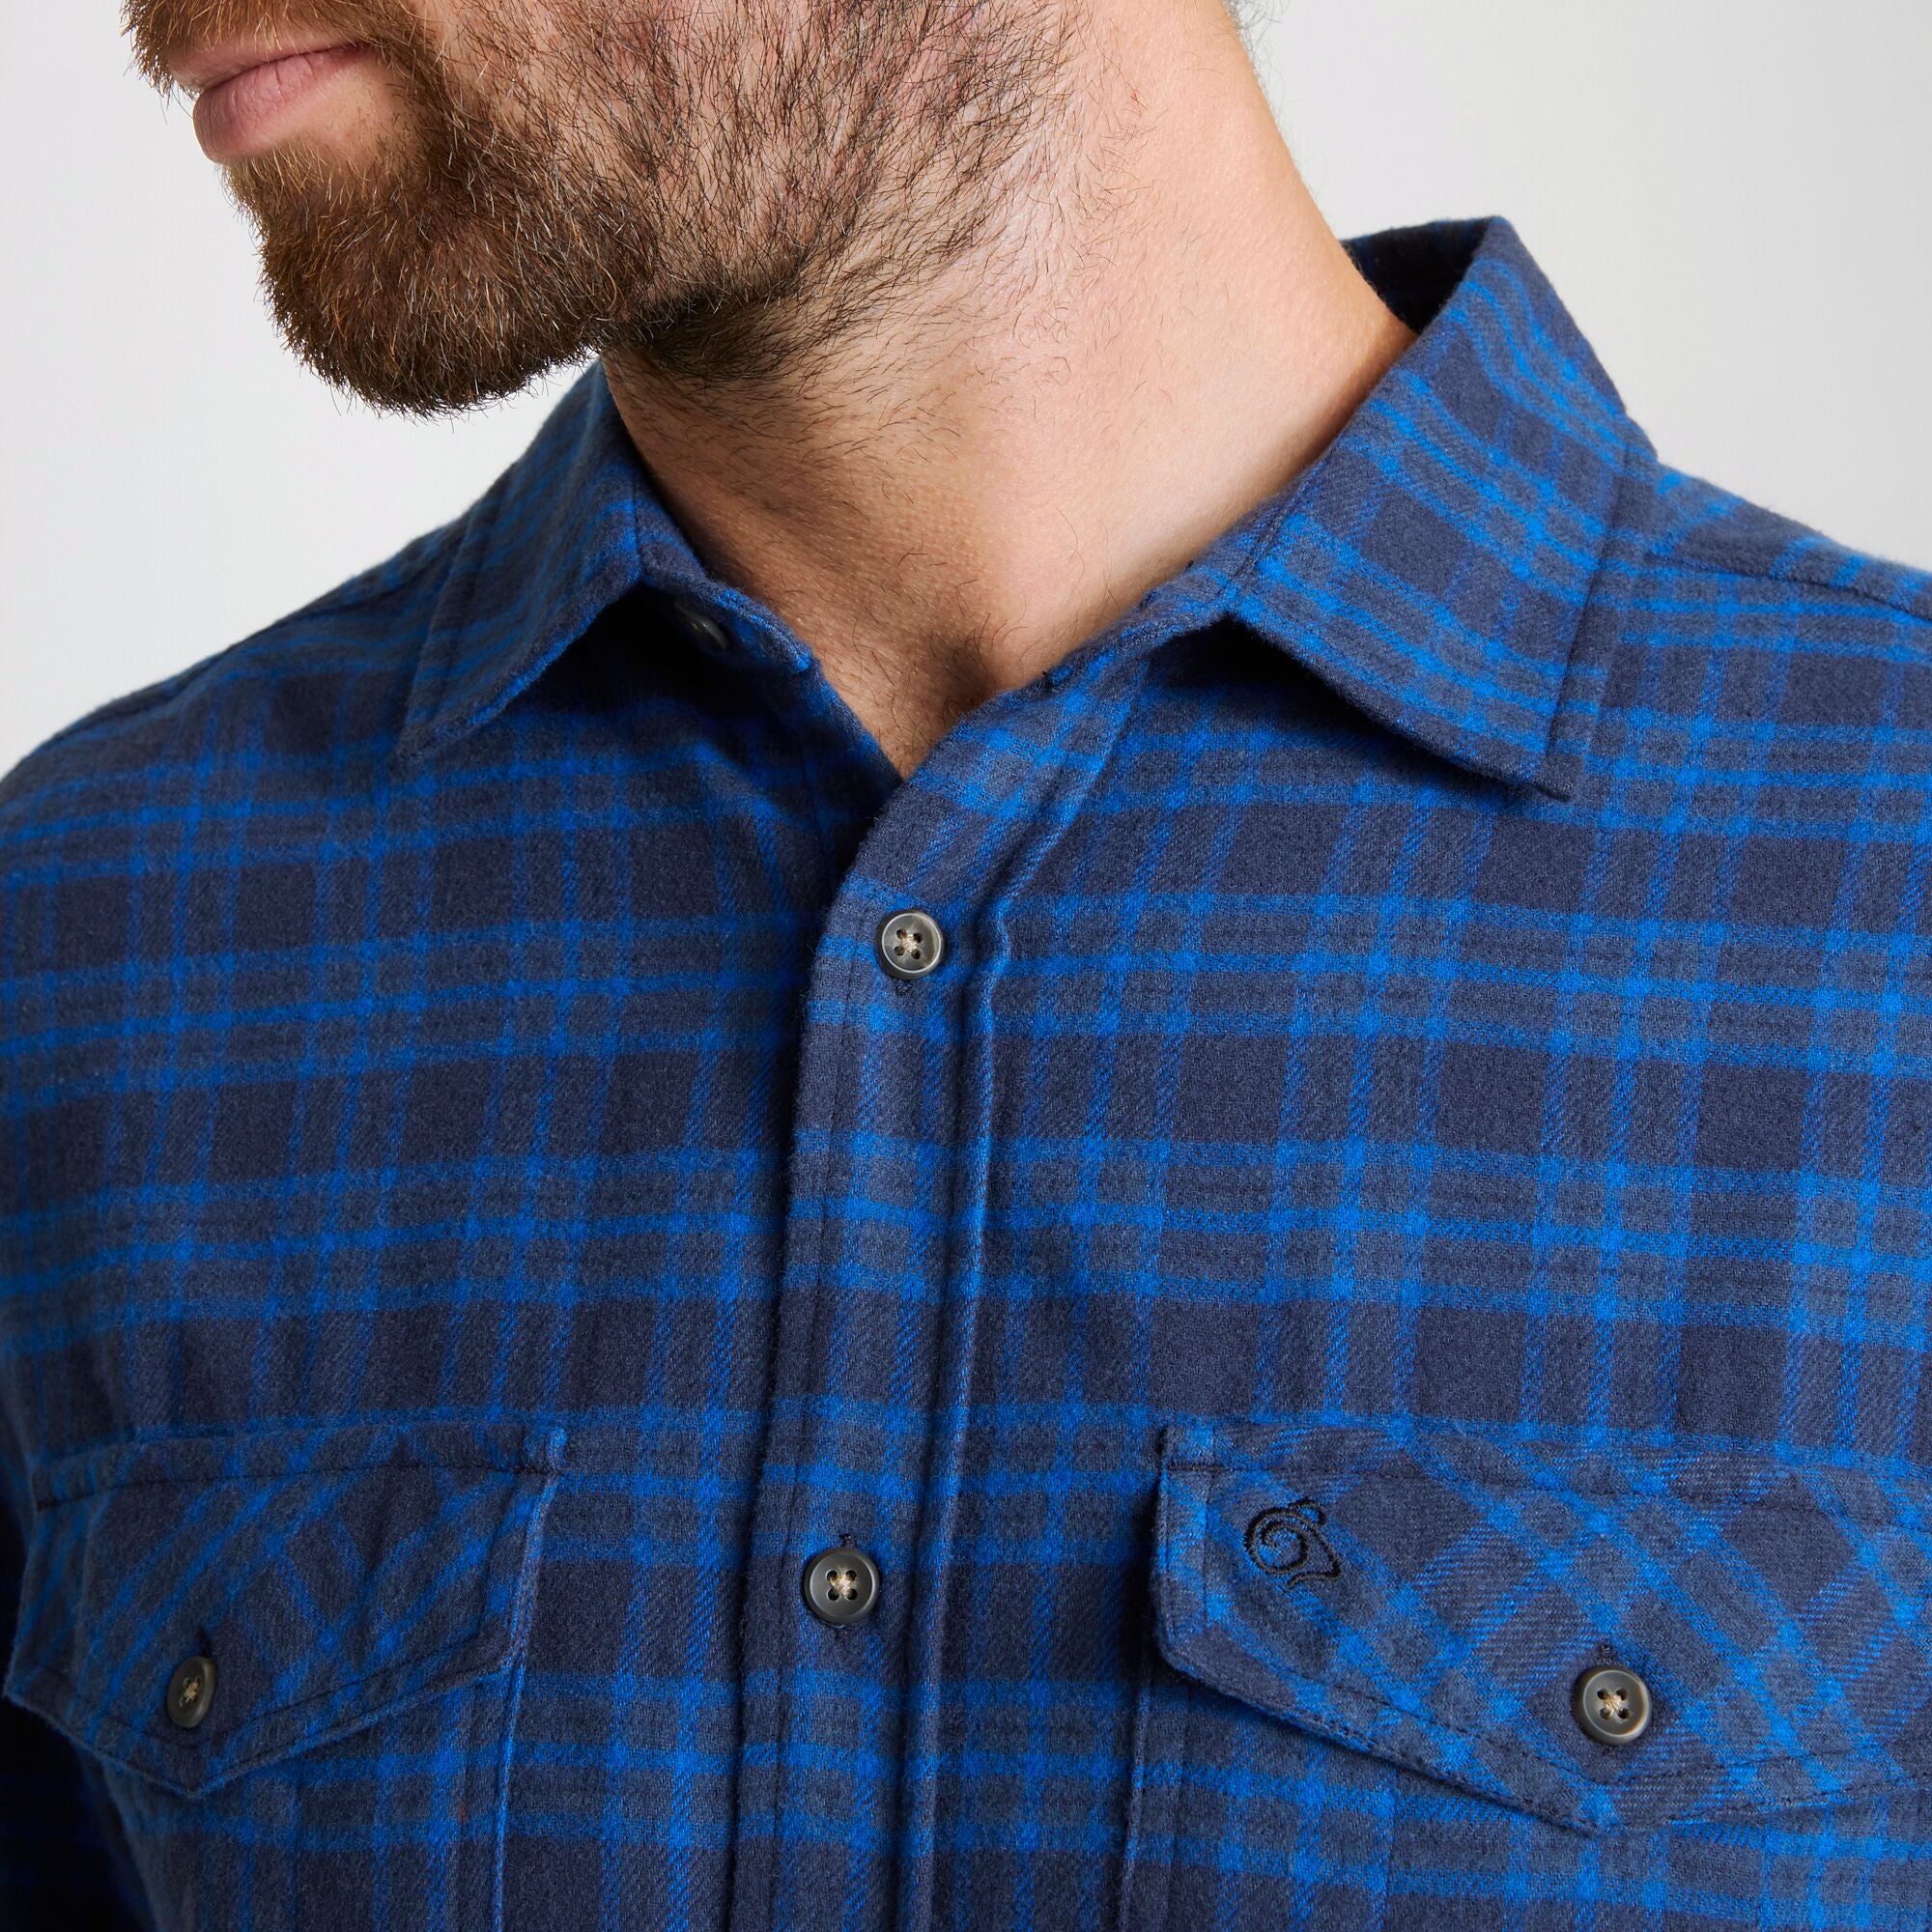 Men's Kiwi Check Long Sleeved Shirt | Blue Navy Check